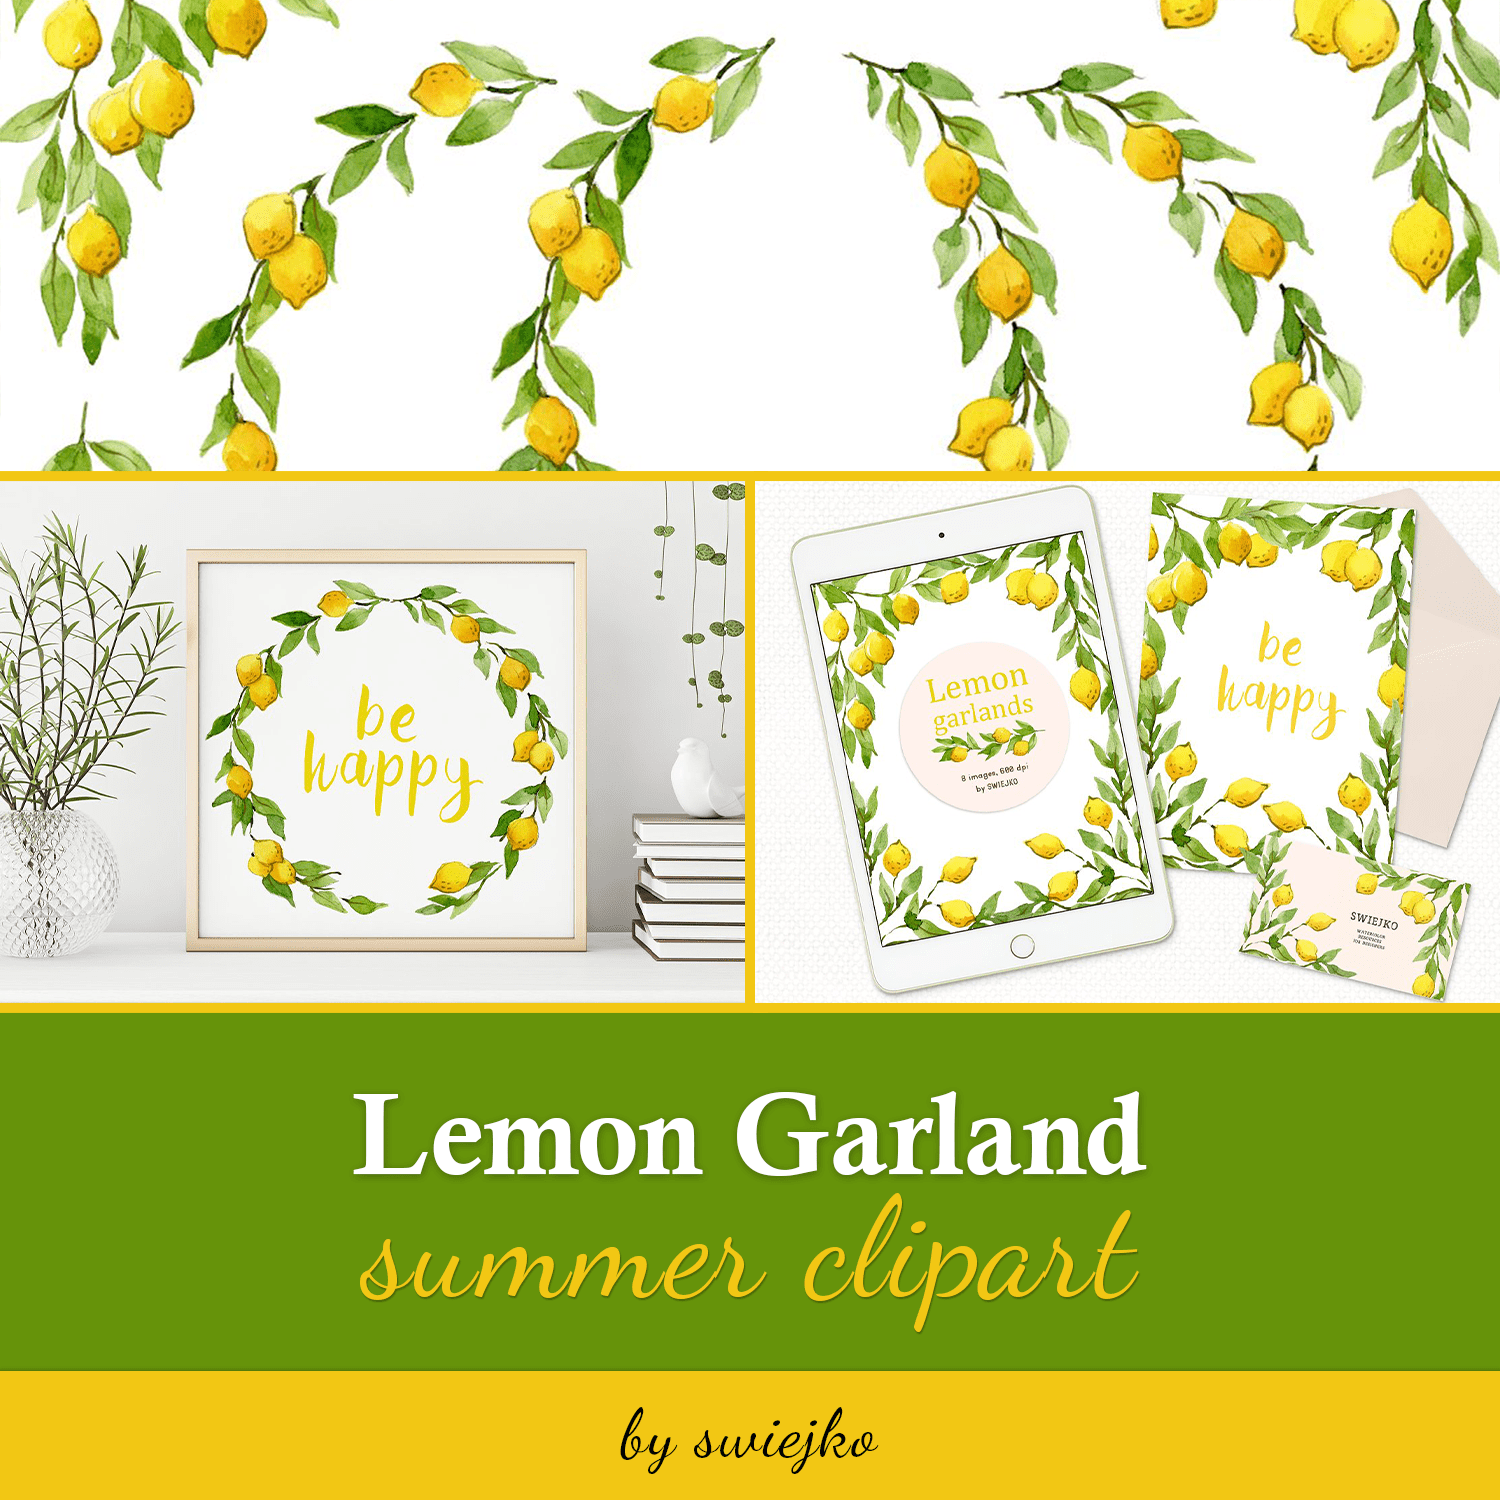 Lemon Garland, summer clipart cover.